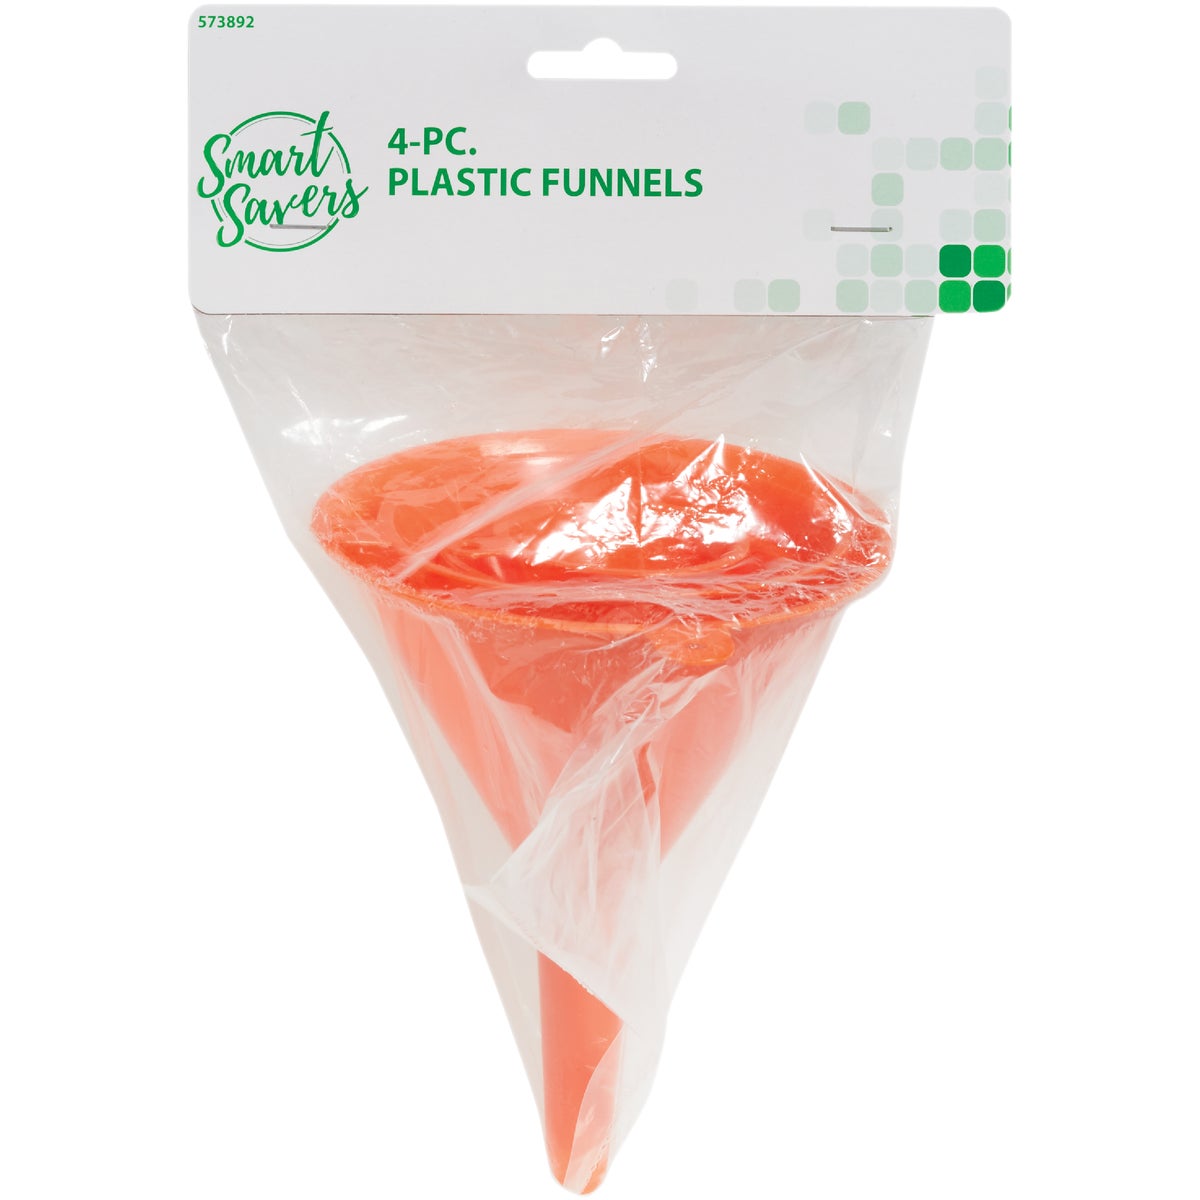 Item 573892, Smart Savers plastic funnel set.